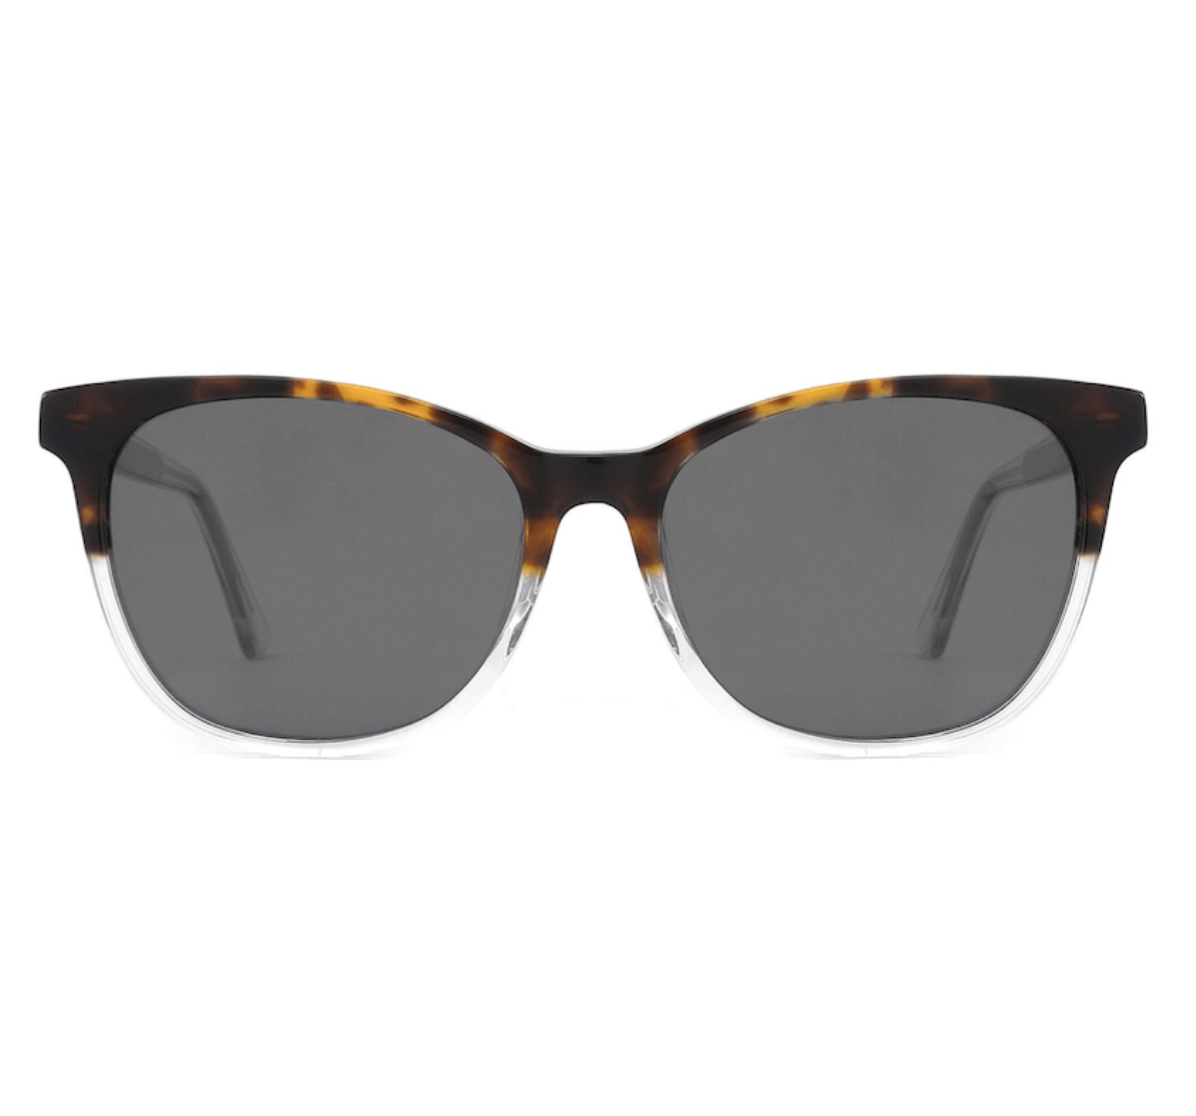 cat eye sunglasses bulk, wholesale cat eye sunglasses, Sunglasses Manufacturer in China, China sunglasses supplier